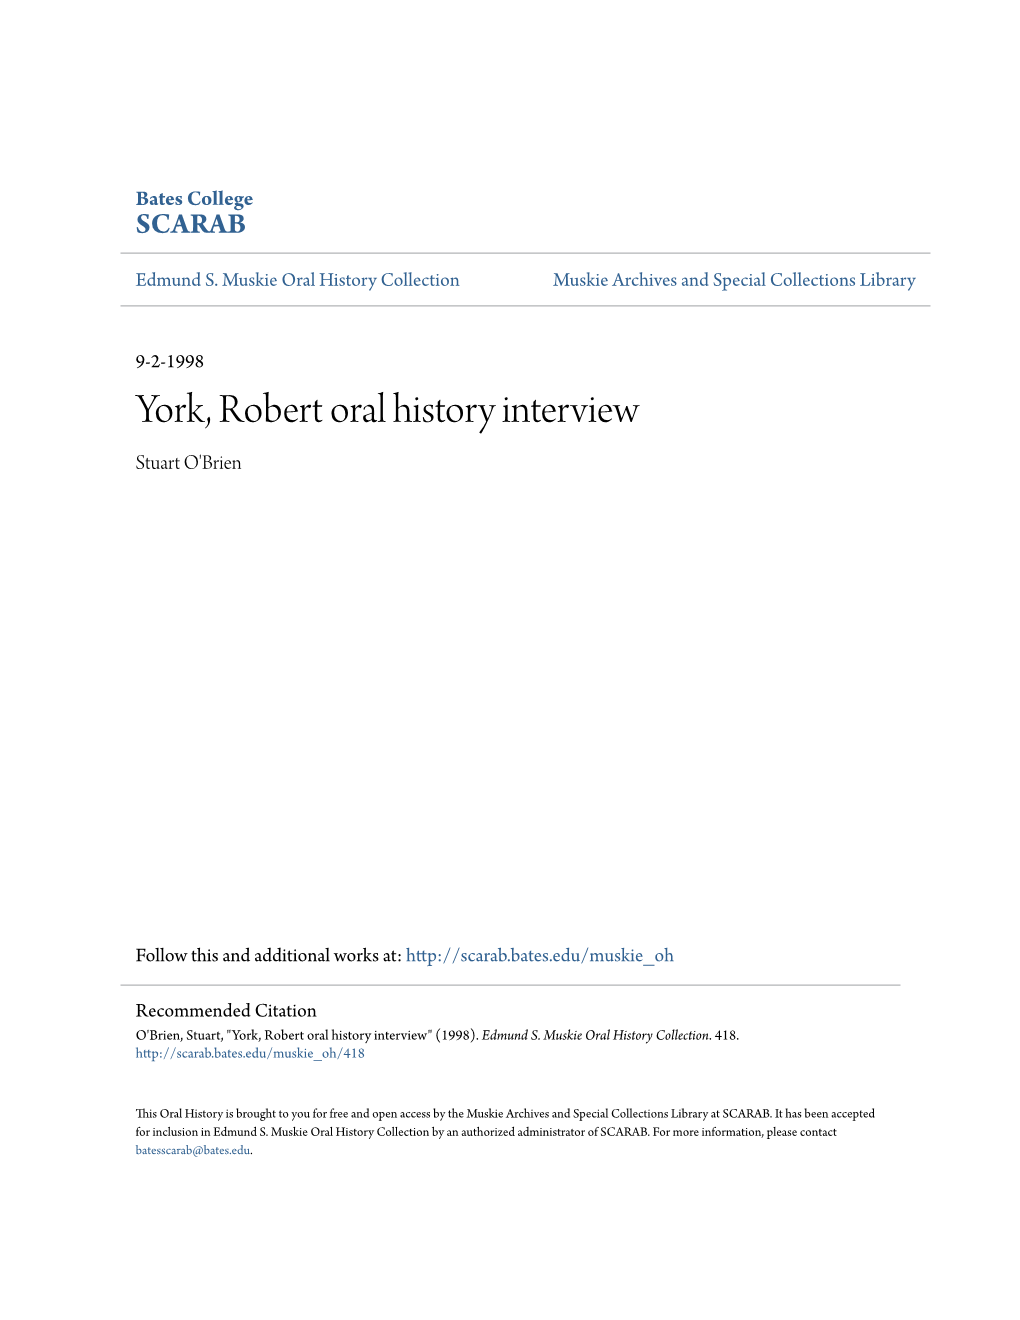 York, Robert Oral History Interview Stuart O'brien